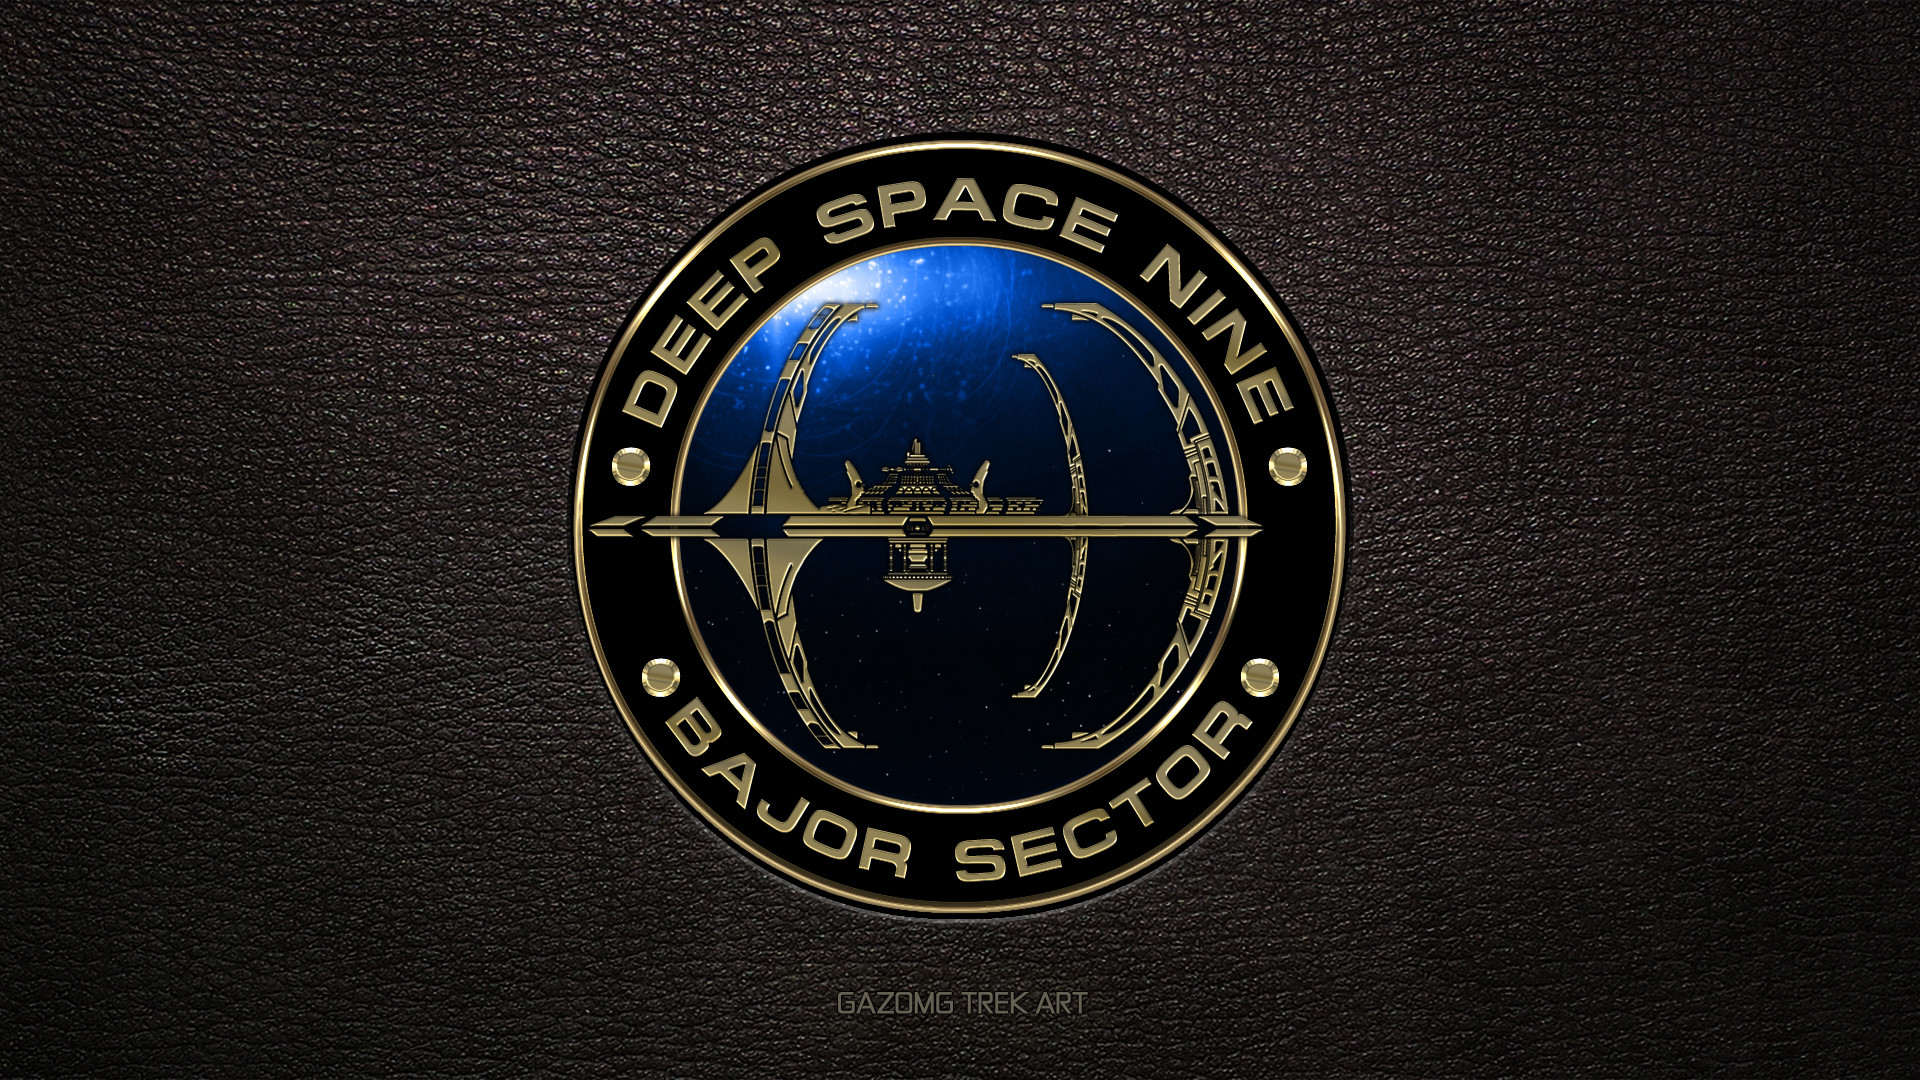 1920x1080 ... Star Trek Deep Space Nine logo DS9 by gazomg